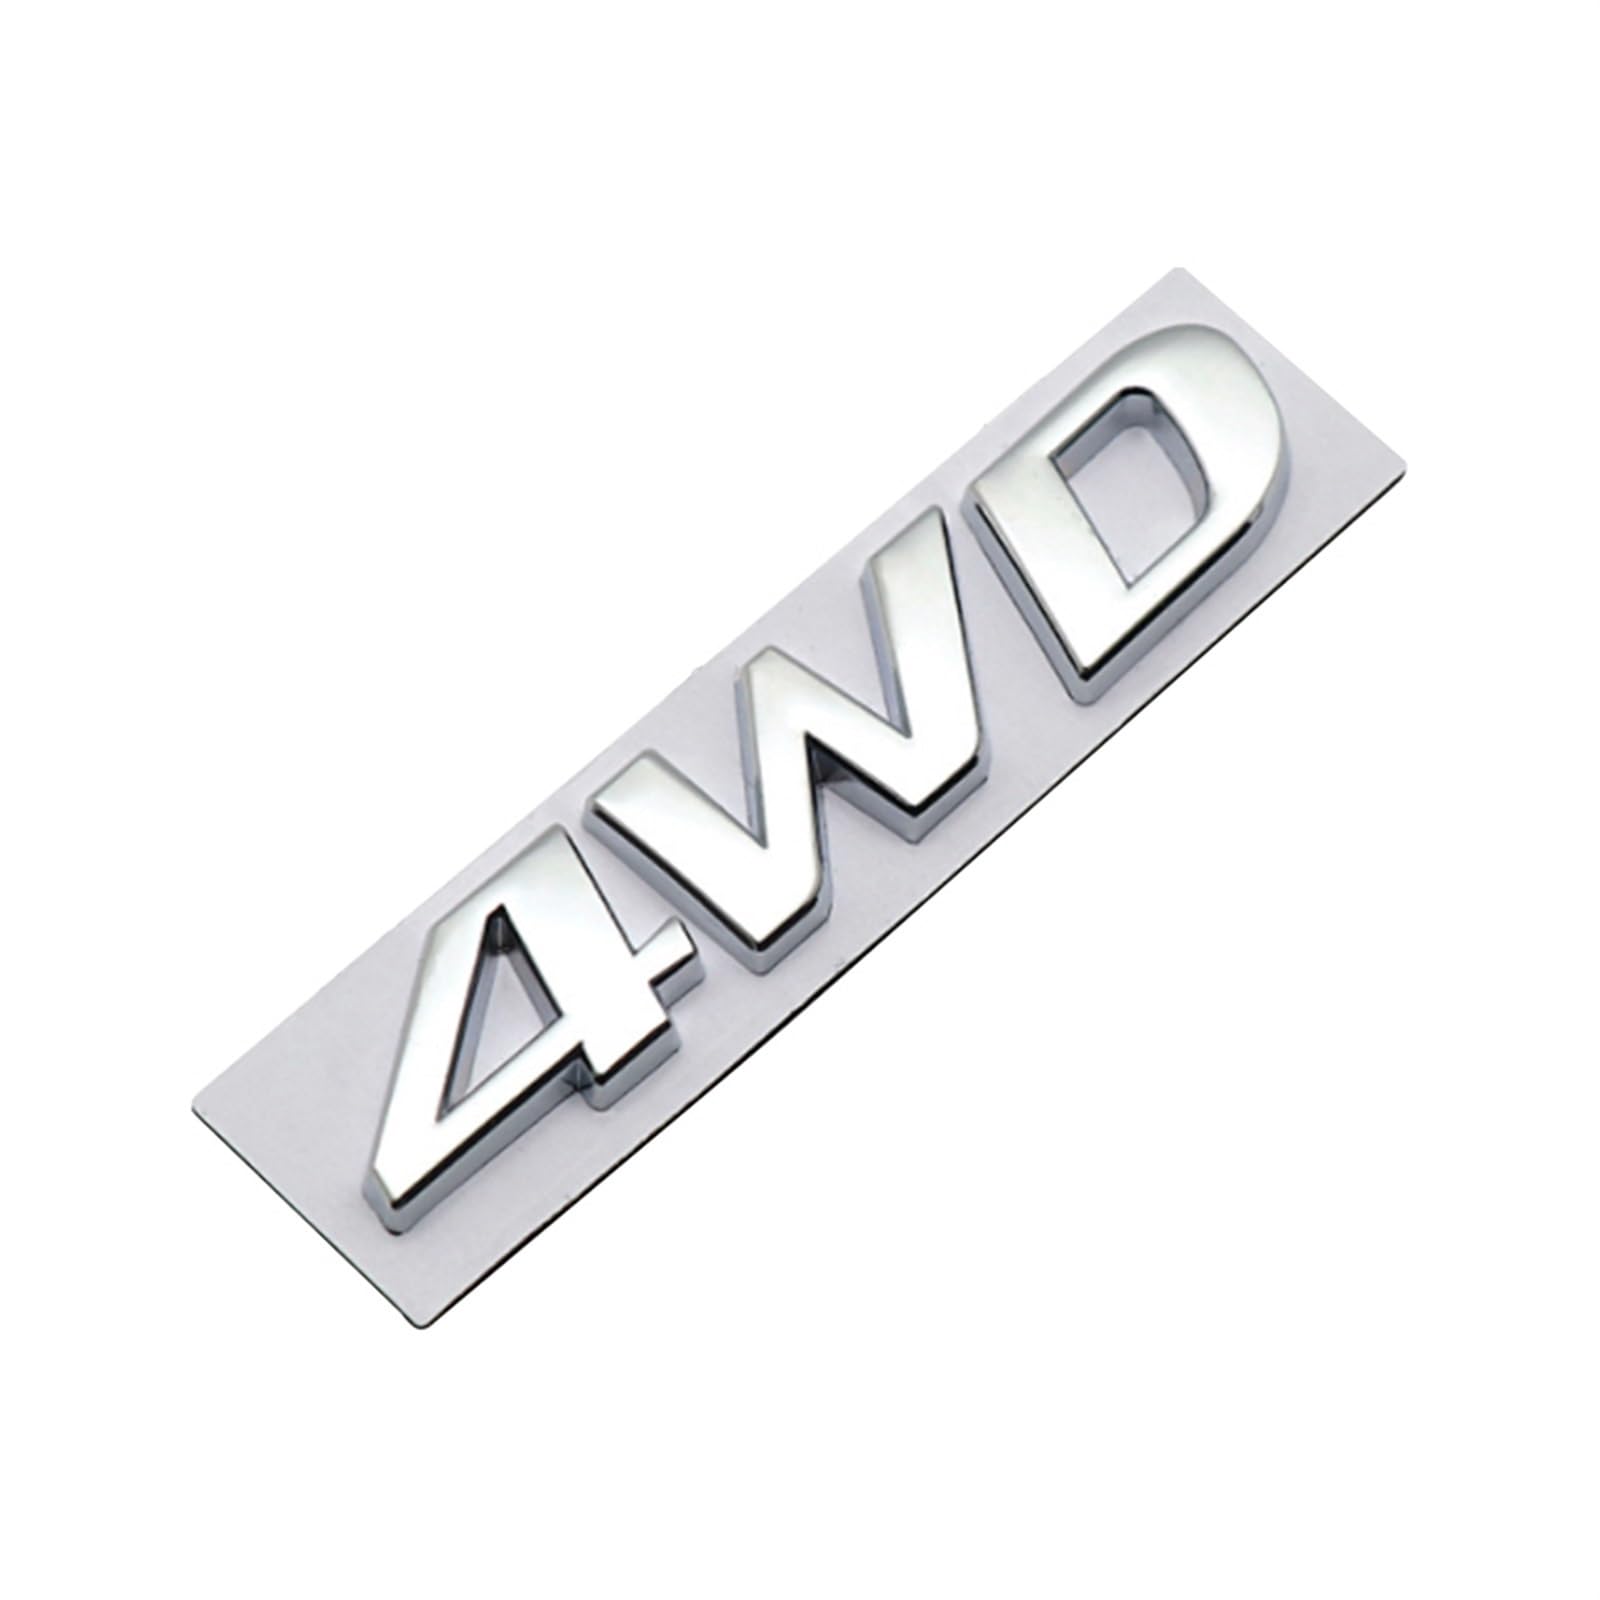 CEVIZ 4WD-Auto-Logo, geeignet, kompatibel for Hyundai IX25 IX35, neuem Tucson, Santafe, Persönlichkeit, Allradantrieb, Hecketikettenaufkleber, Kofferraumbuchstabe (Color : Silver) von CEVIZ